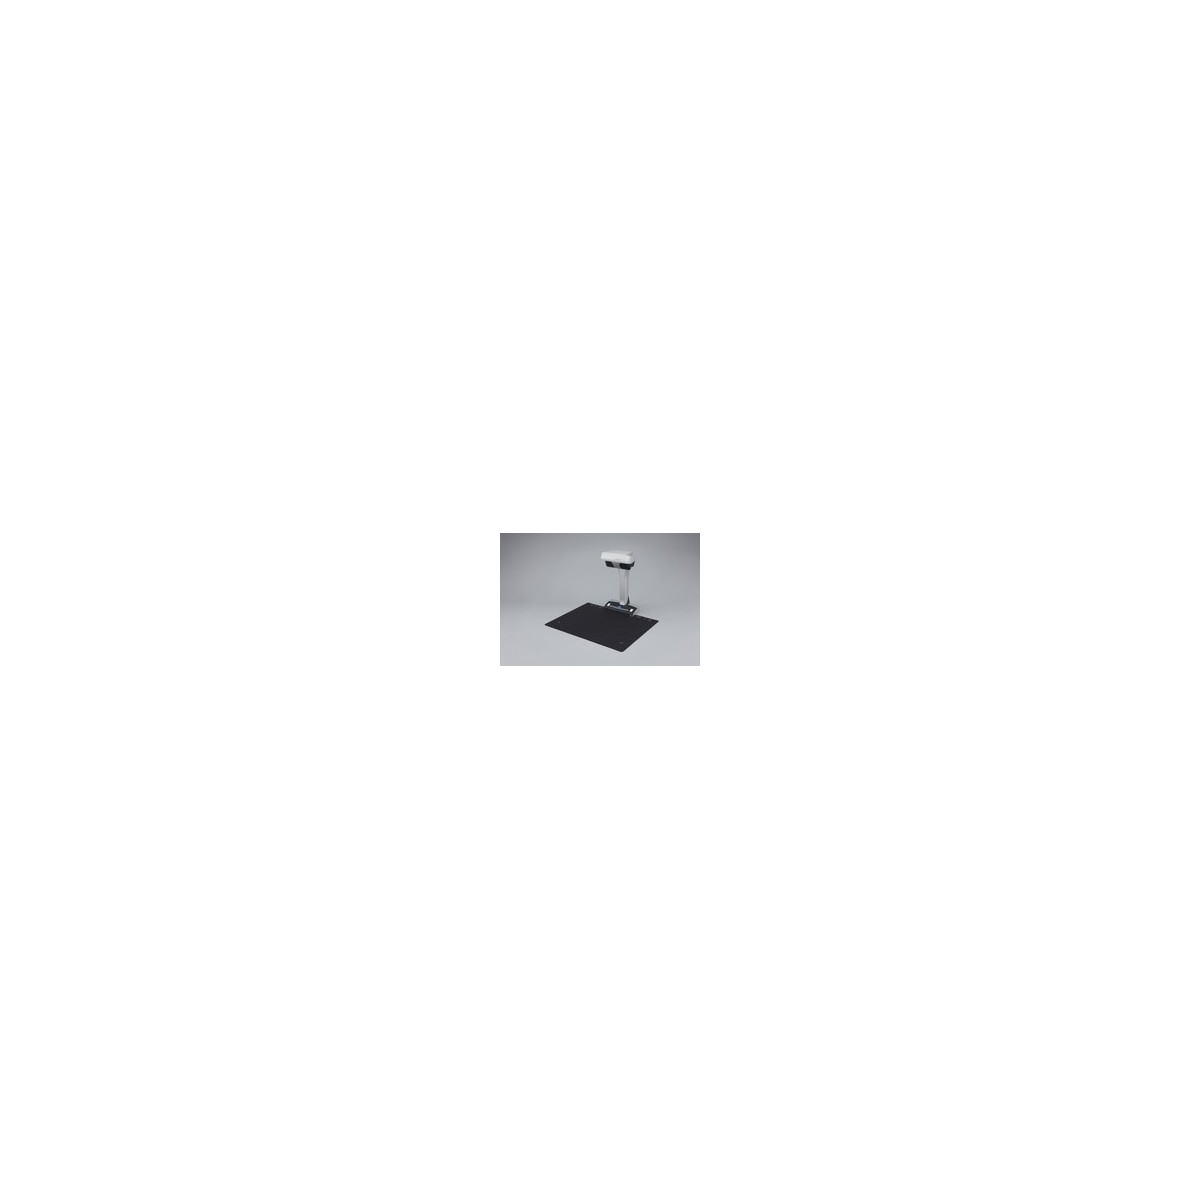 Fujitsu ScanSnap SV600 - 432 x 300 mm - 285 x 218 DPI - Grayscale,Monochrome - Overhead scanner - Black,White - CCD